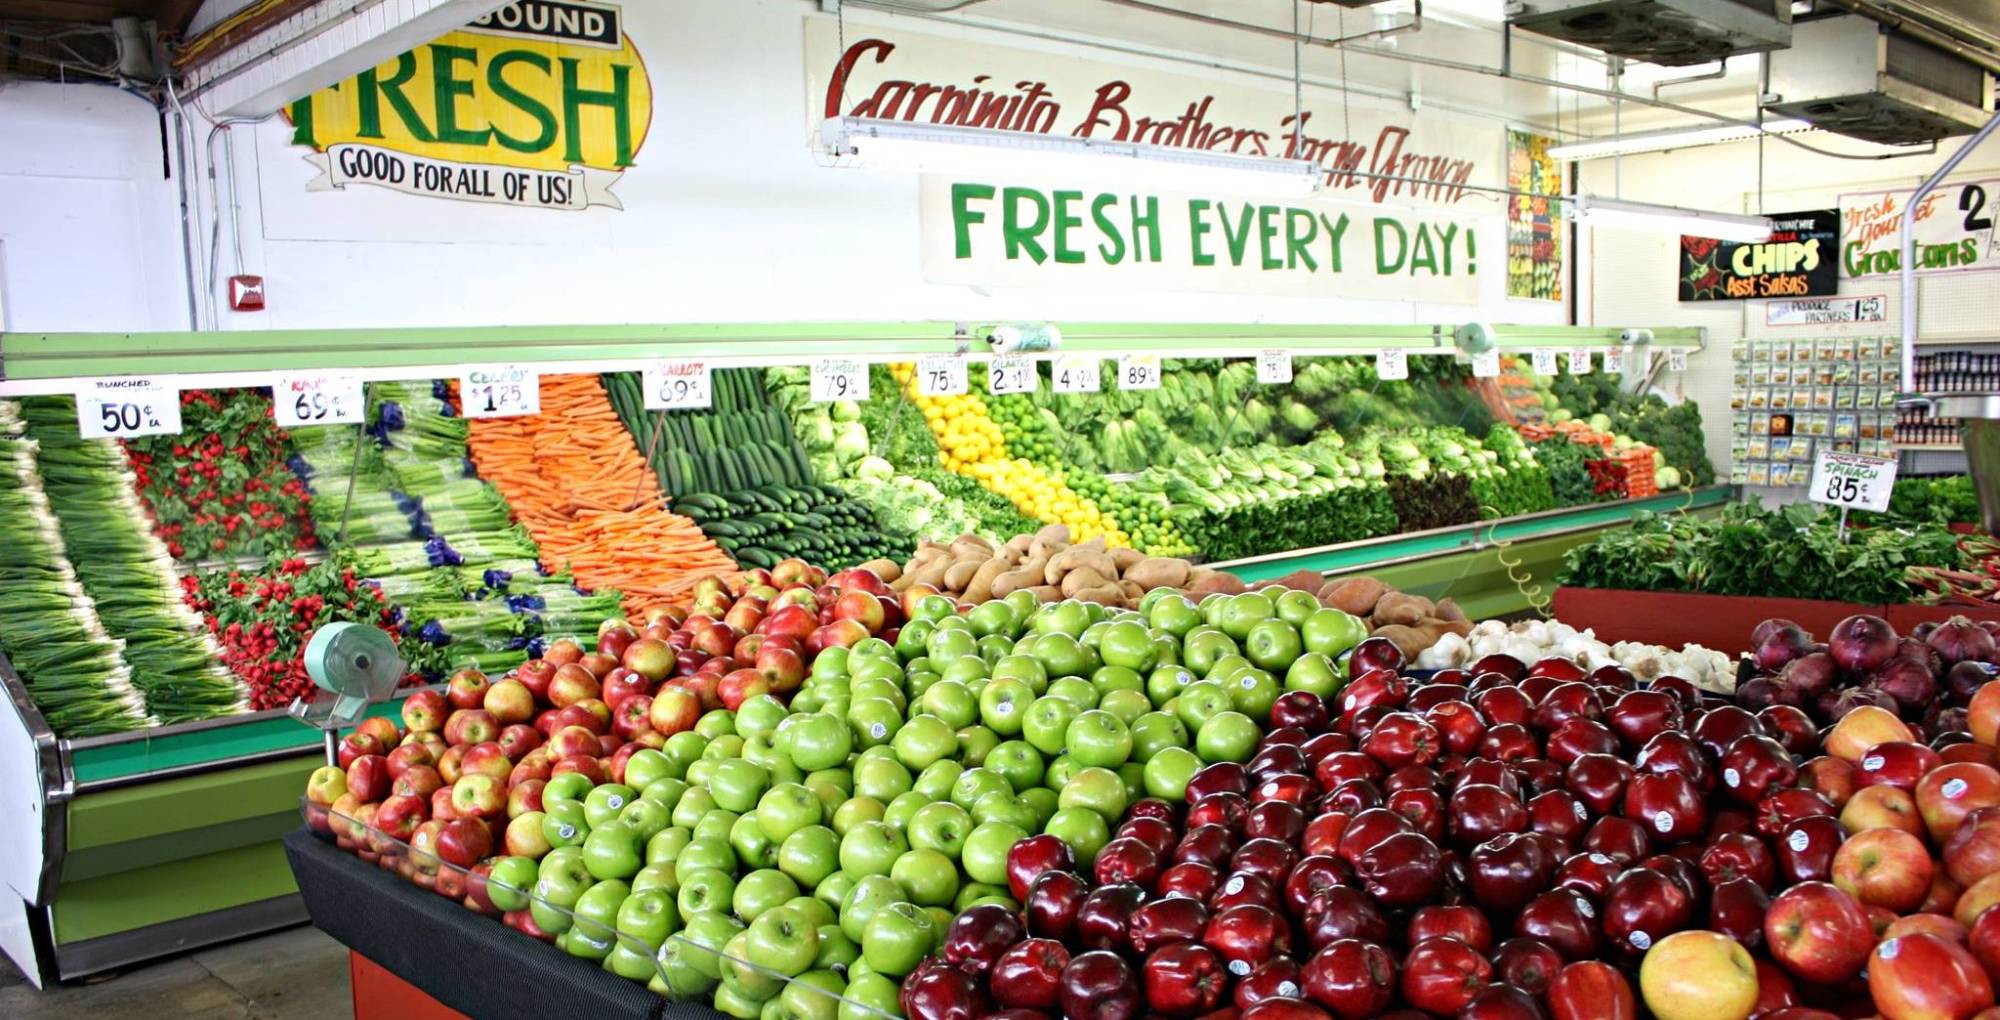 Farm fresh produce at Carpinito Brothers in Kent, Washington